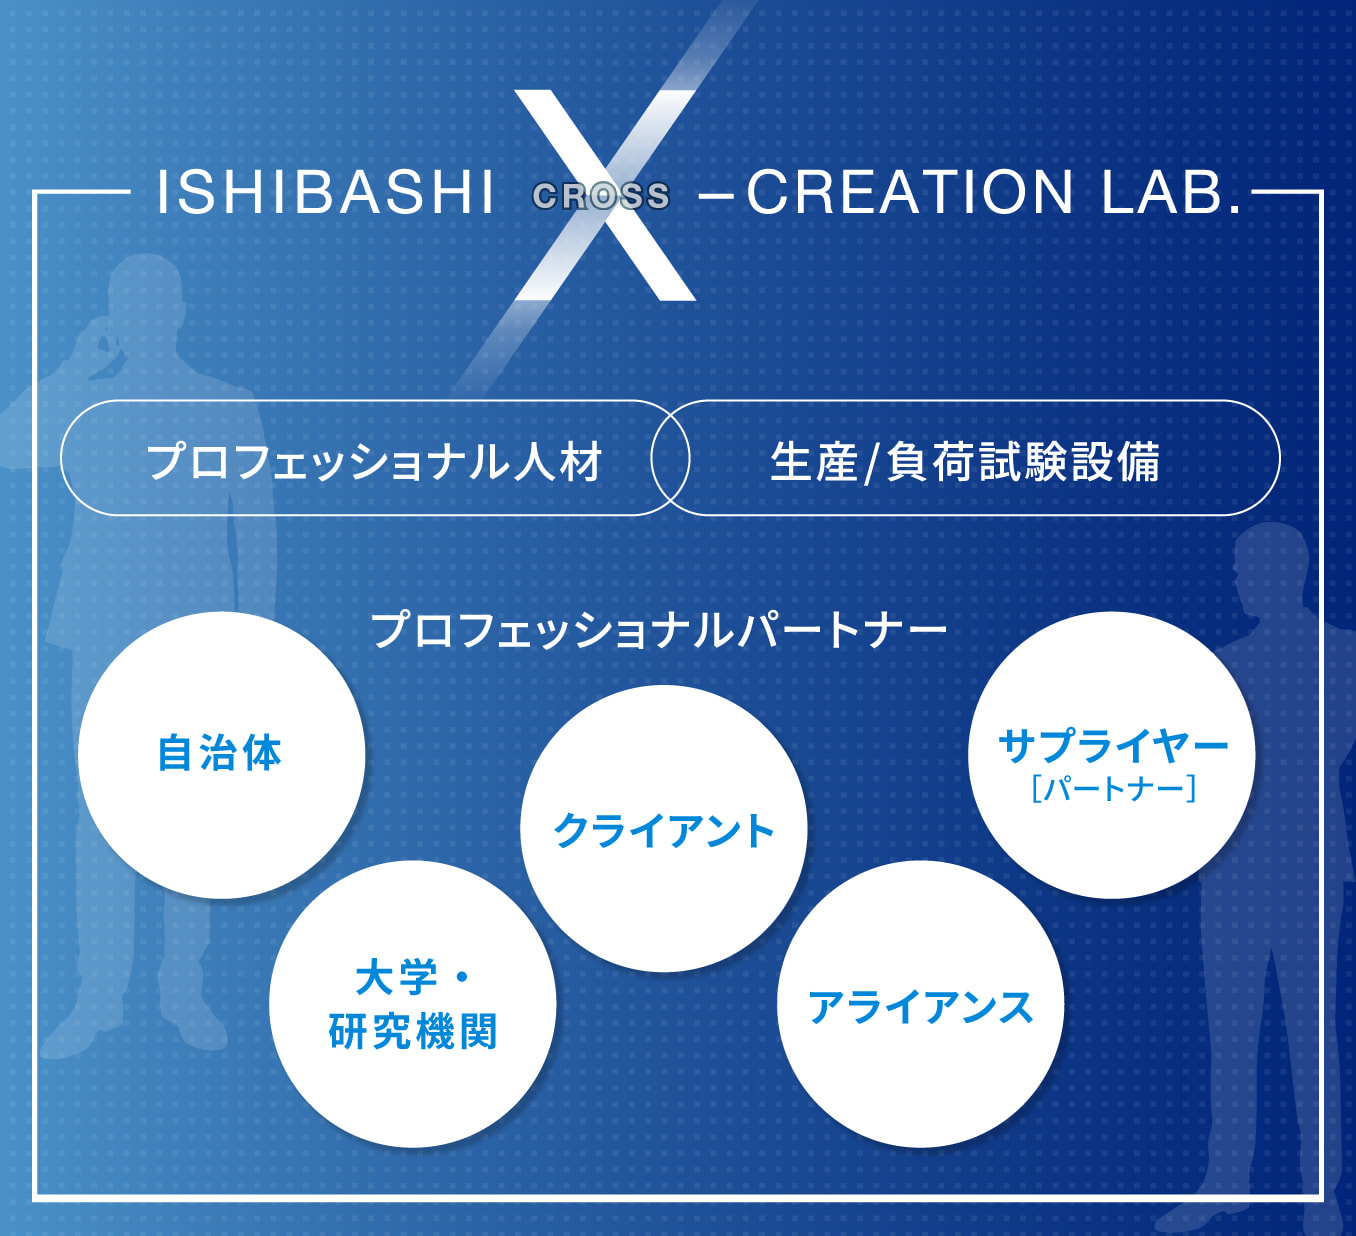 ISHIBASHI X-CREATION LAB.プロフェッショナル人材、生産/負荷試験設備、プロフェッショナルパートナー、自治体、大学・研究機関、クライアント、アライアンス、サプライヤー［パートナー］